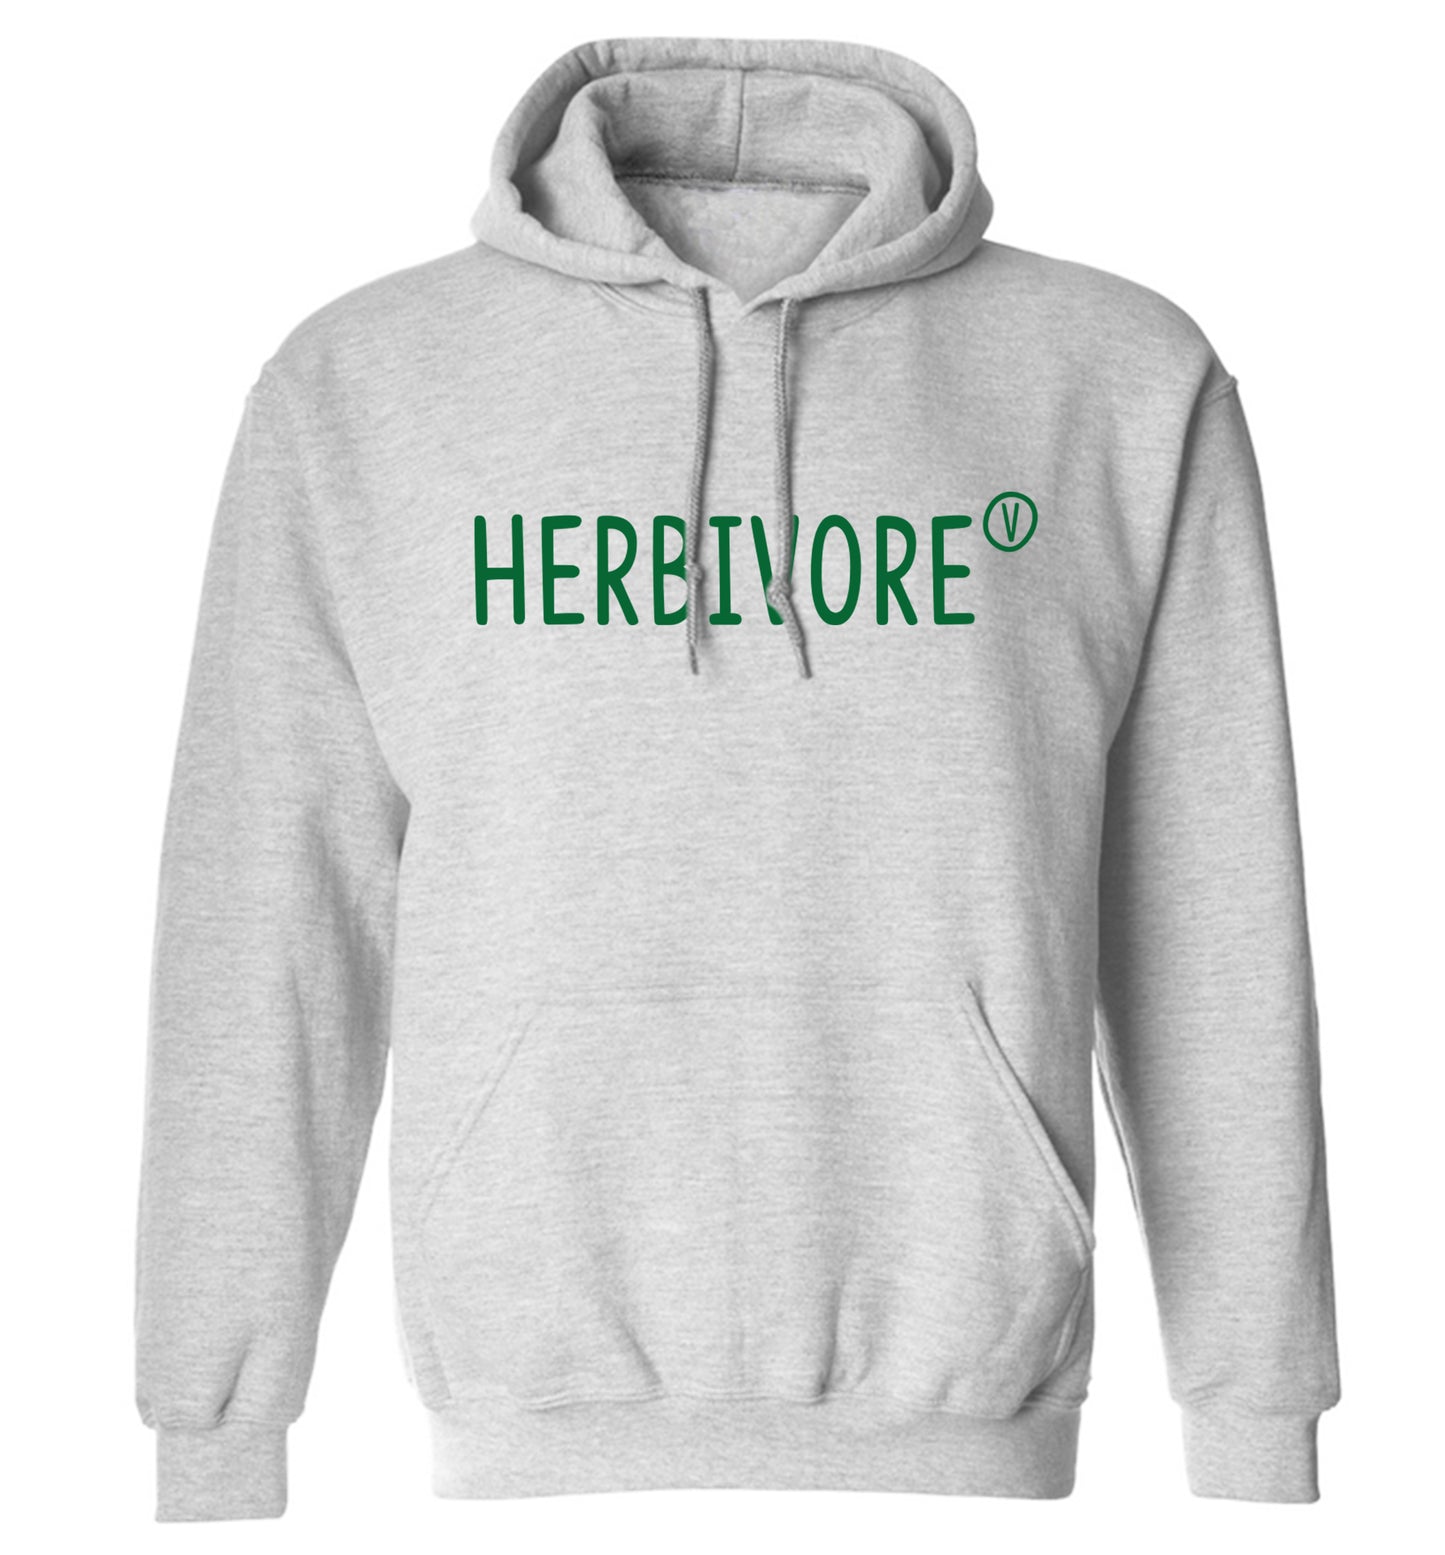 Herbivore adults unisex grey hoodie 2XL